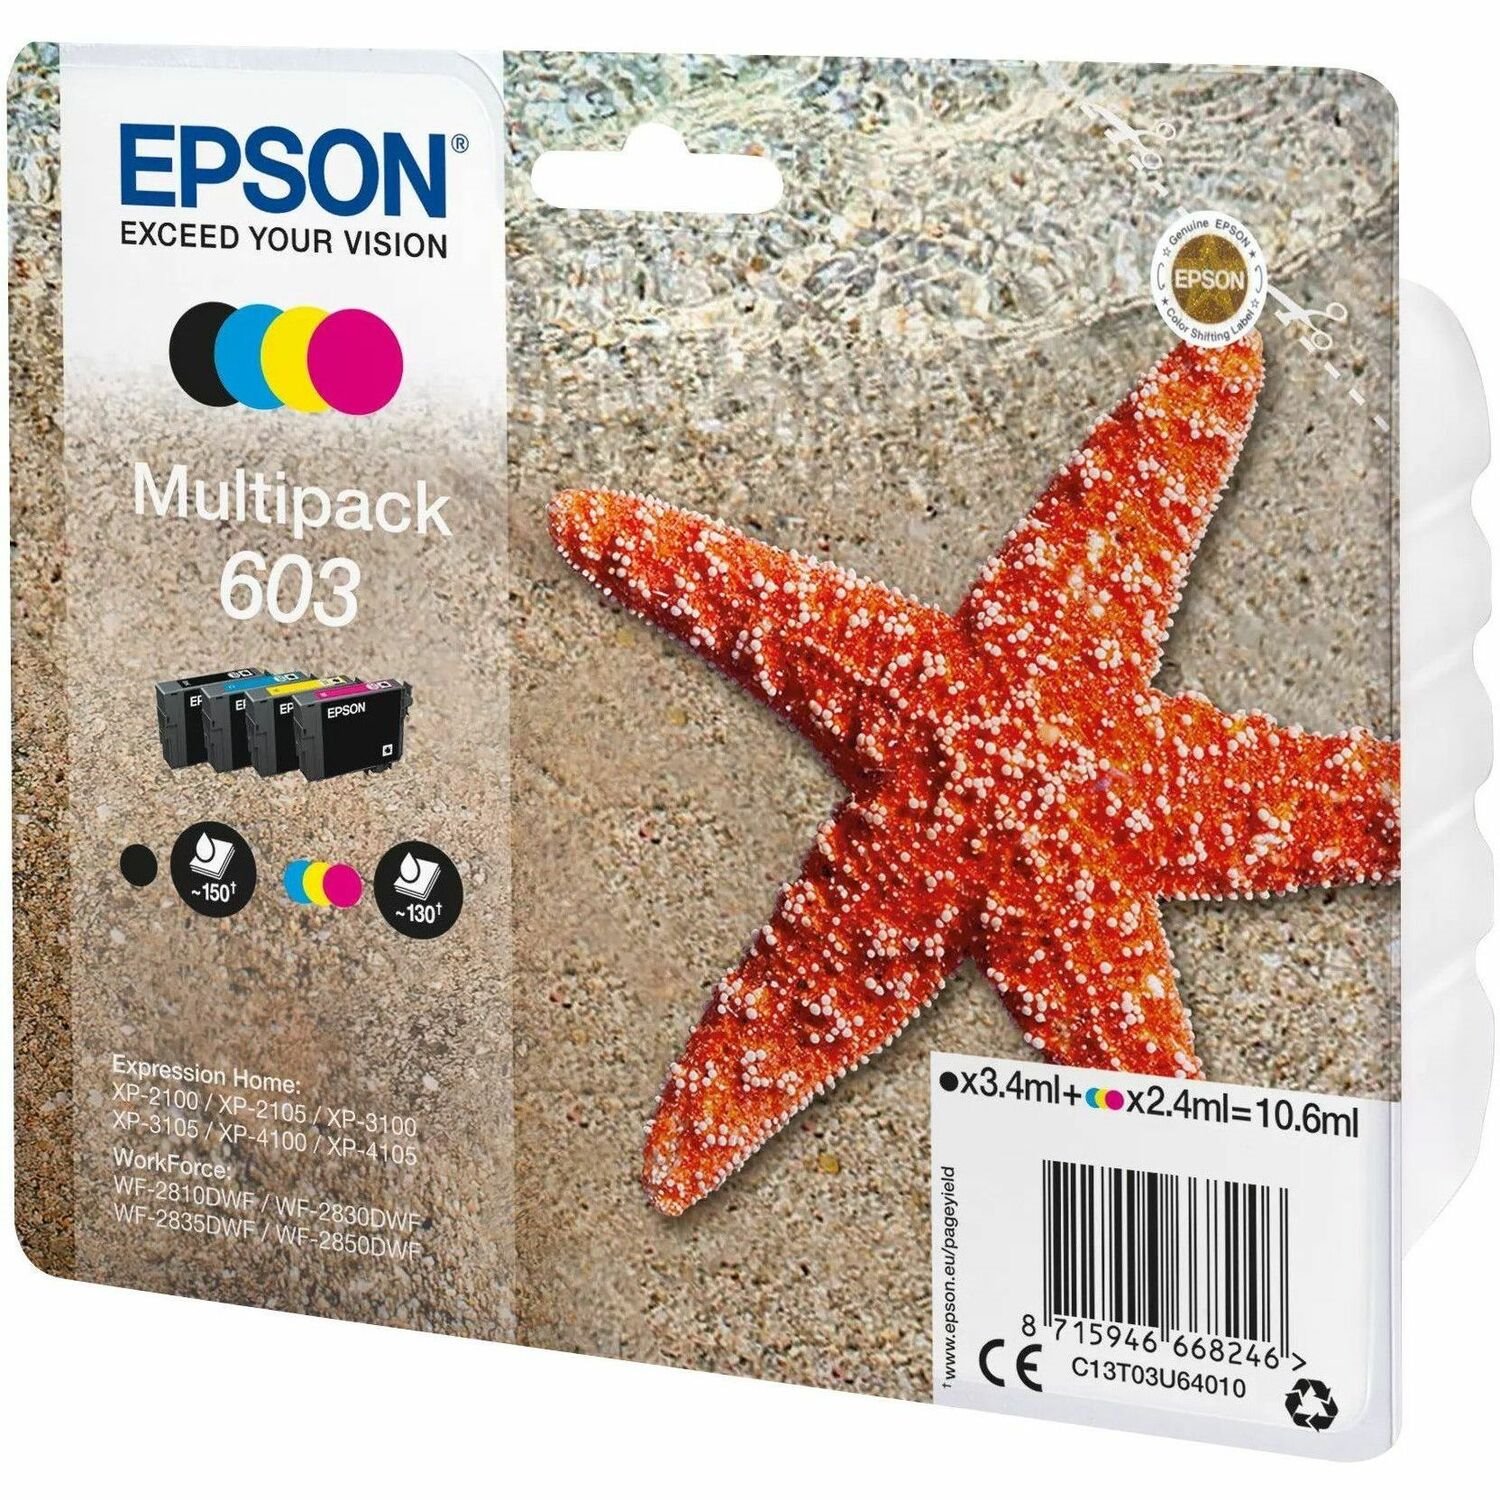 Epson 603 Original Inkjet Ink Cartridge - Multi-pack - Cyan, Magenta, Yellow, Black - 4 / Pack